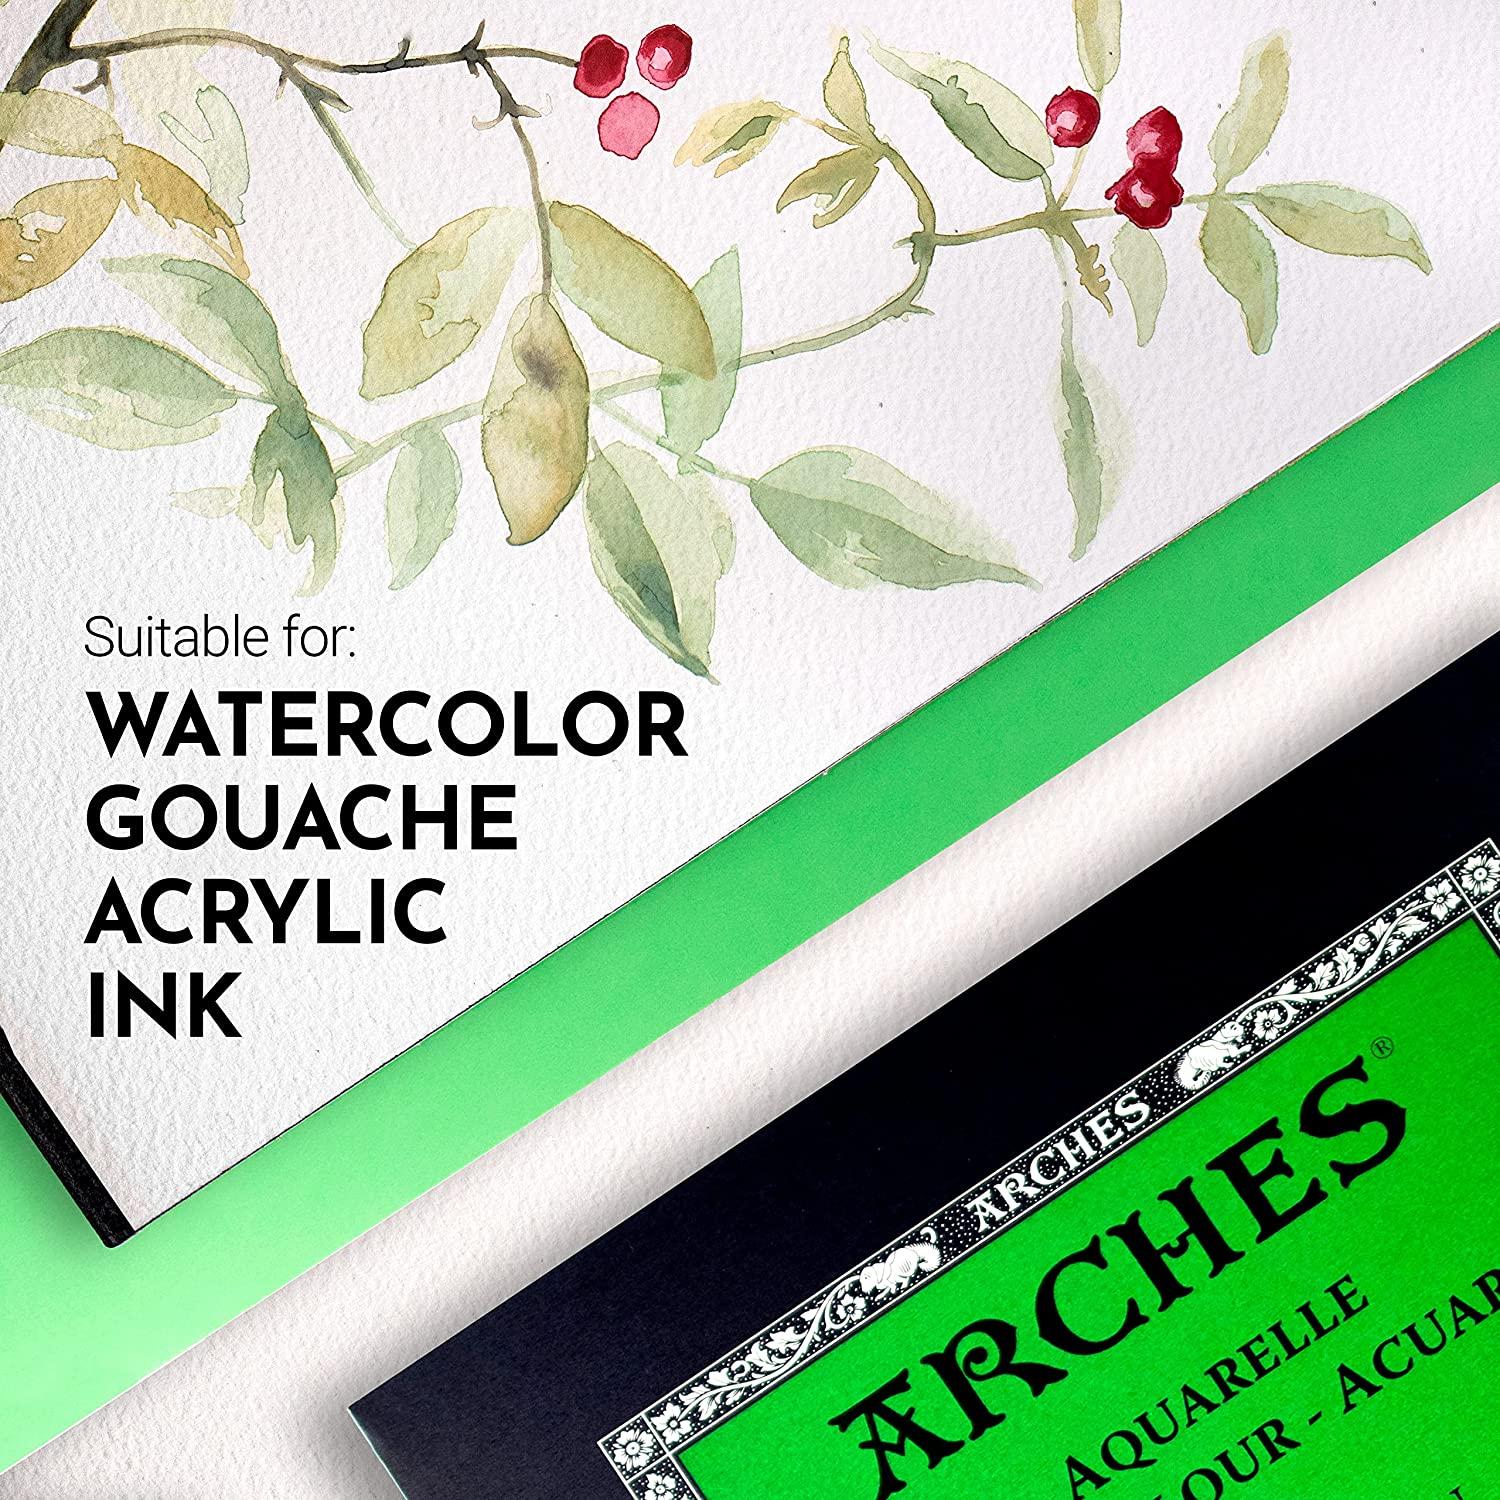 Arches Watercolor Block - 7.9 x 7.9, Cold Press, 140 lb, 20 sheets